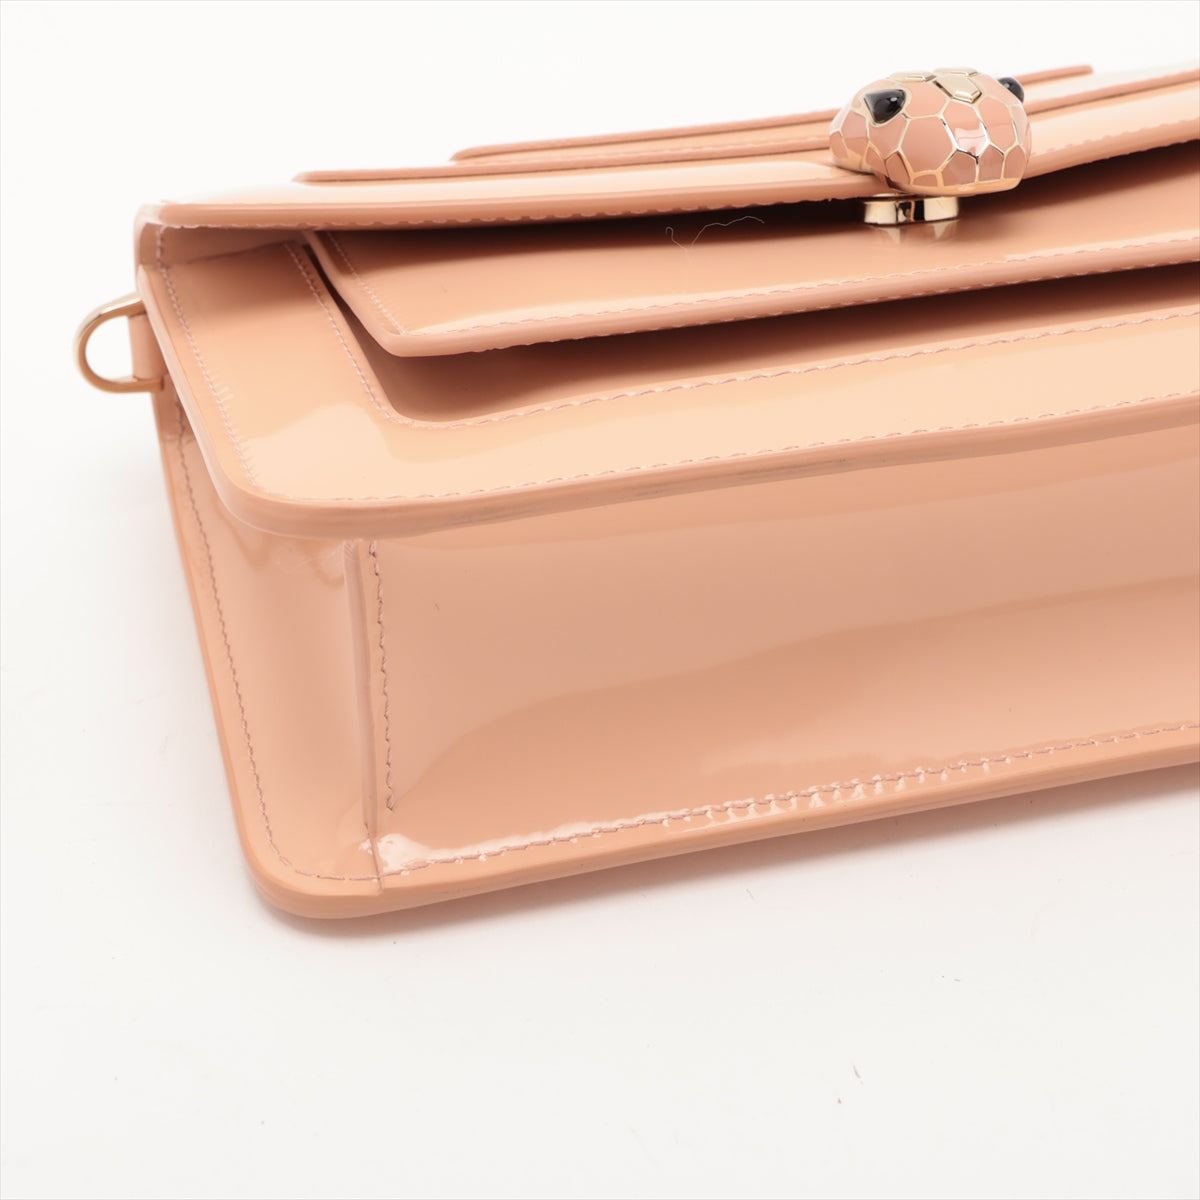 Bulgari Selpenti Patent Leather Shoulder Bag Pink Beige Mirrored